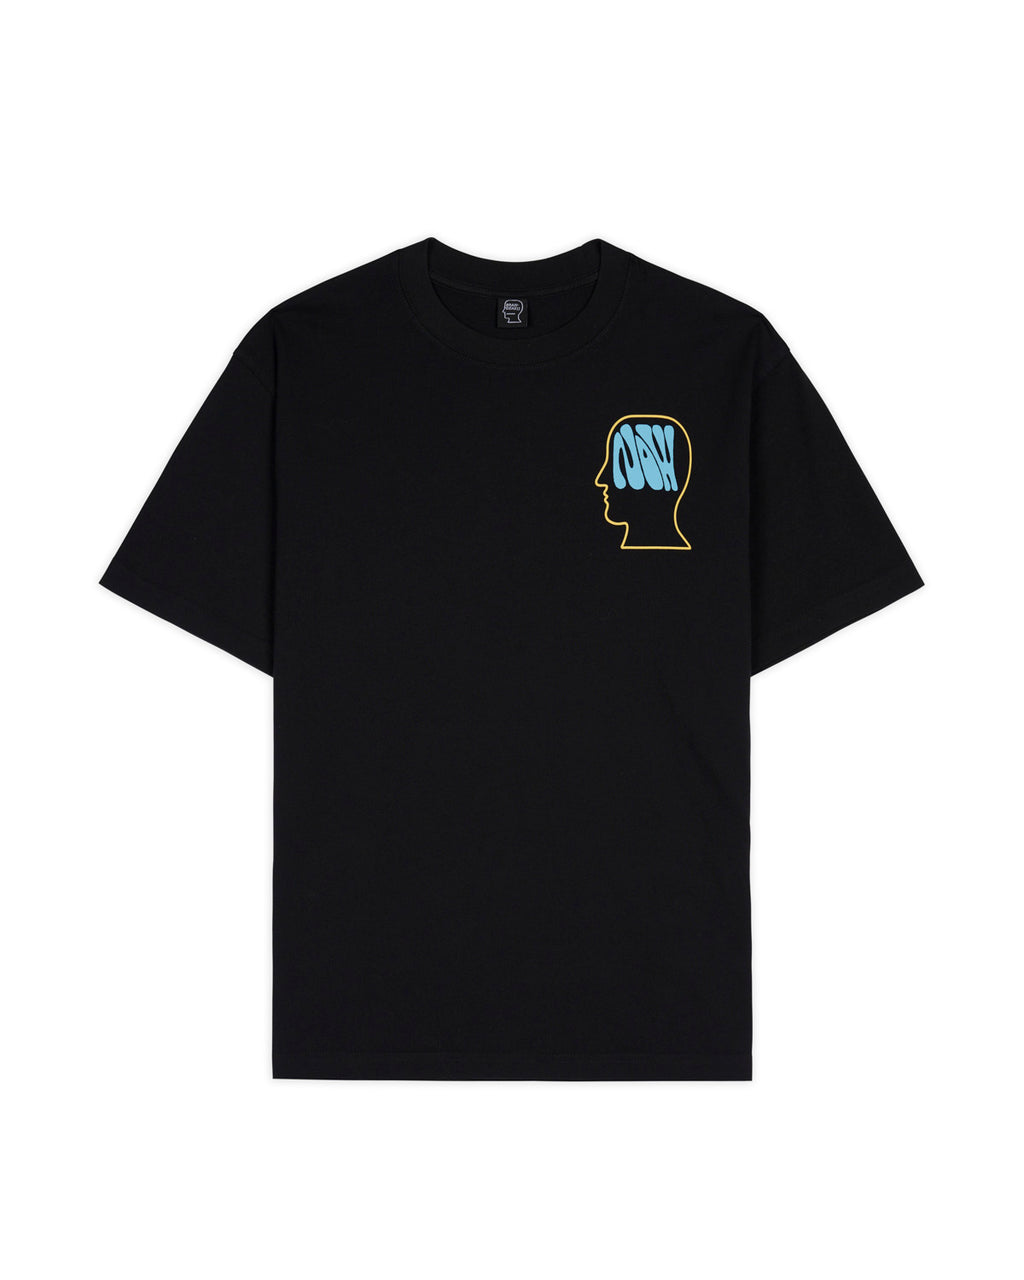 The Now Movement T-shirt - Black 1